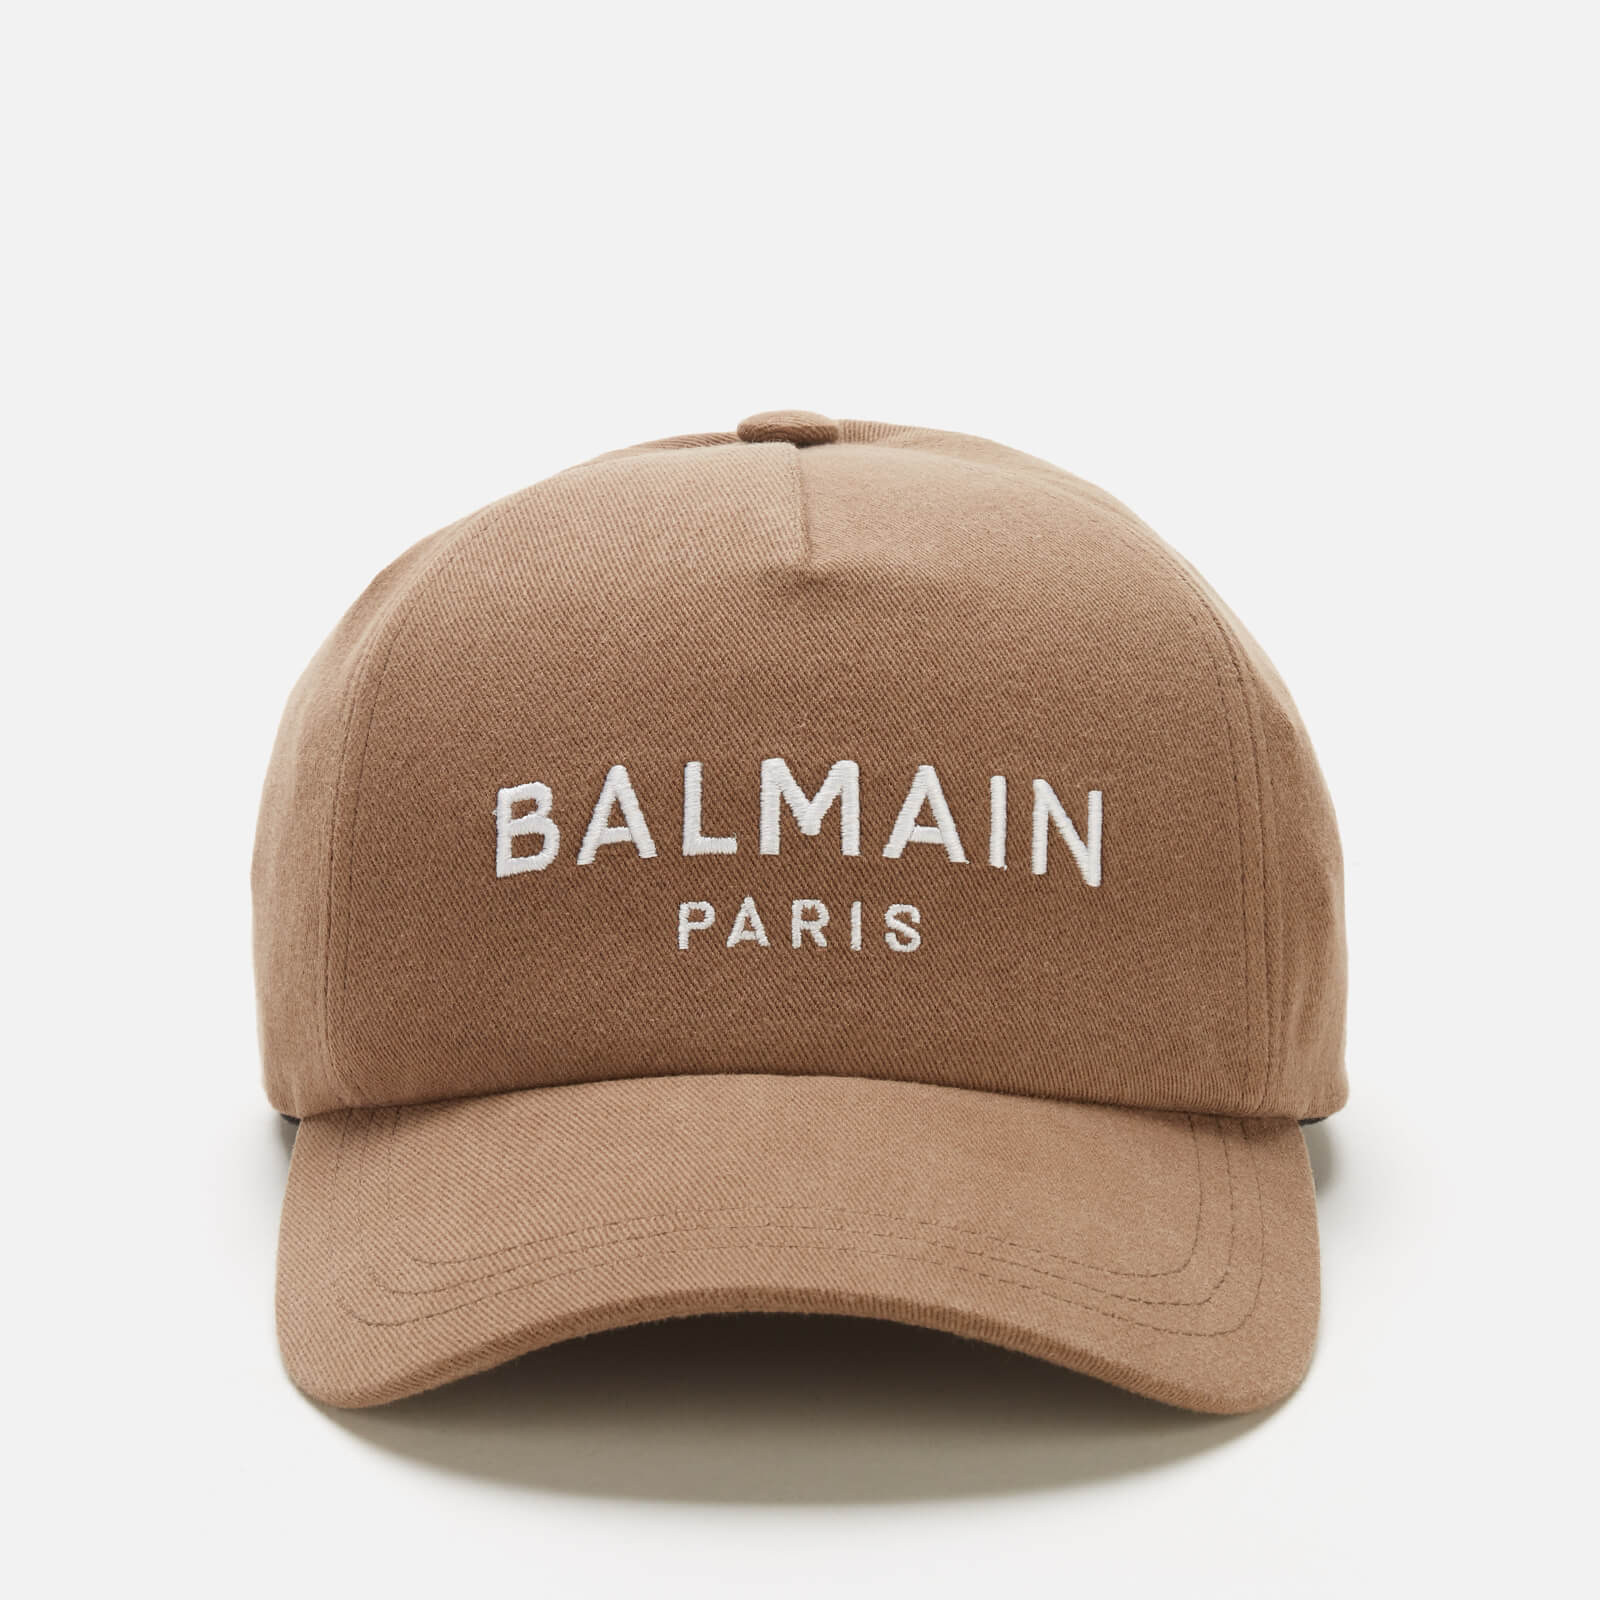 Balmain Men's Cotton Cap - Taupe/White